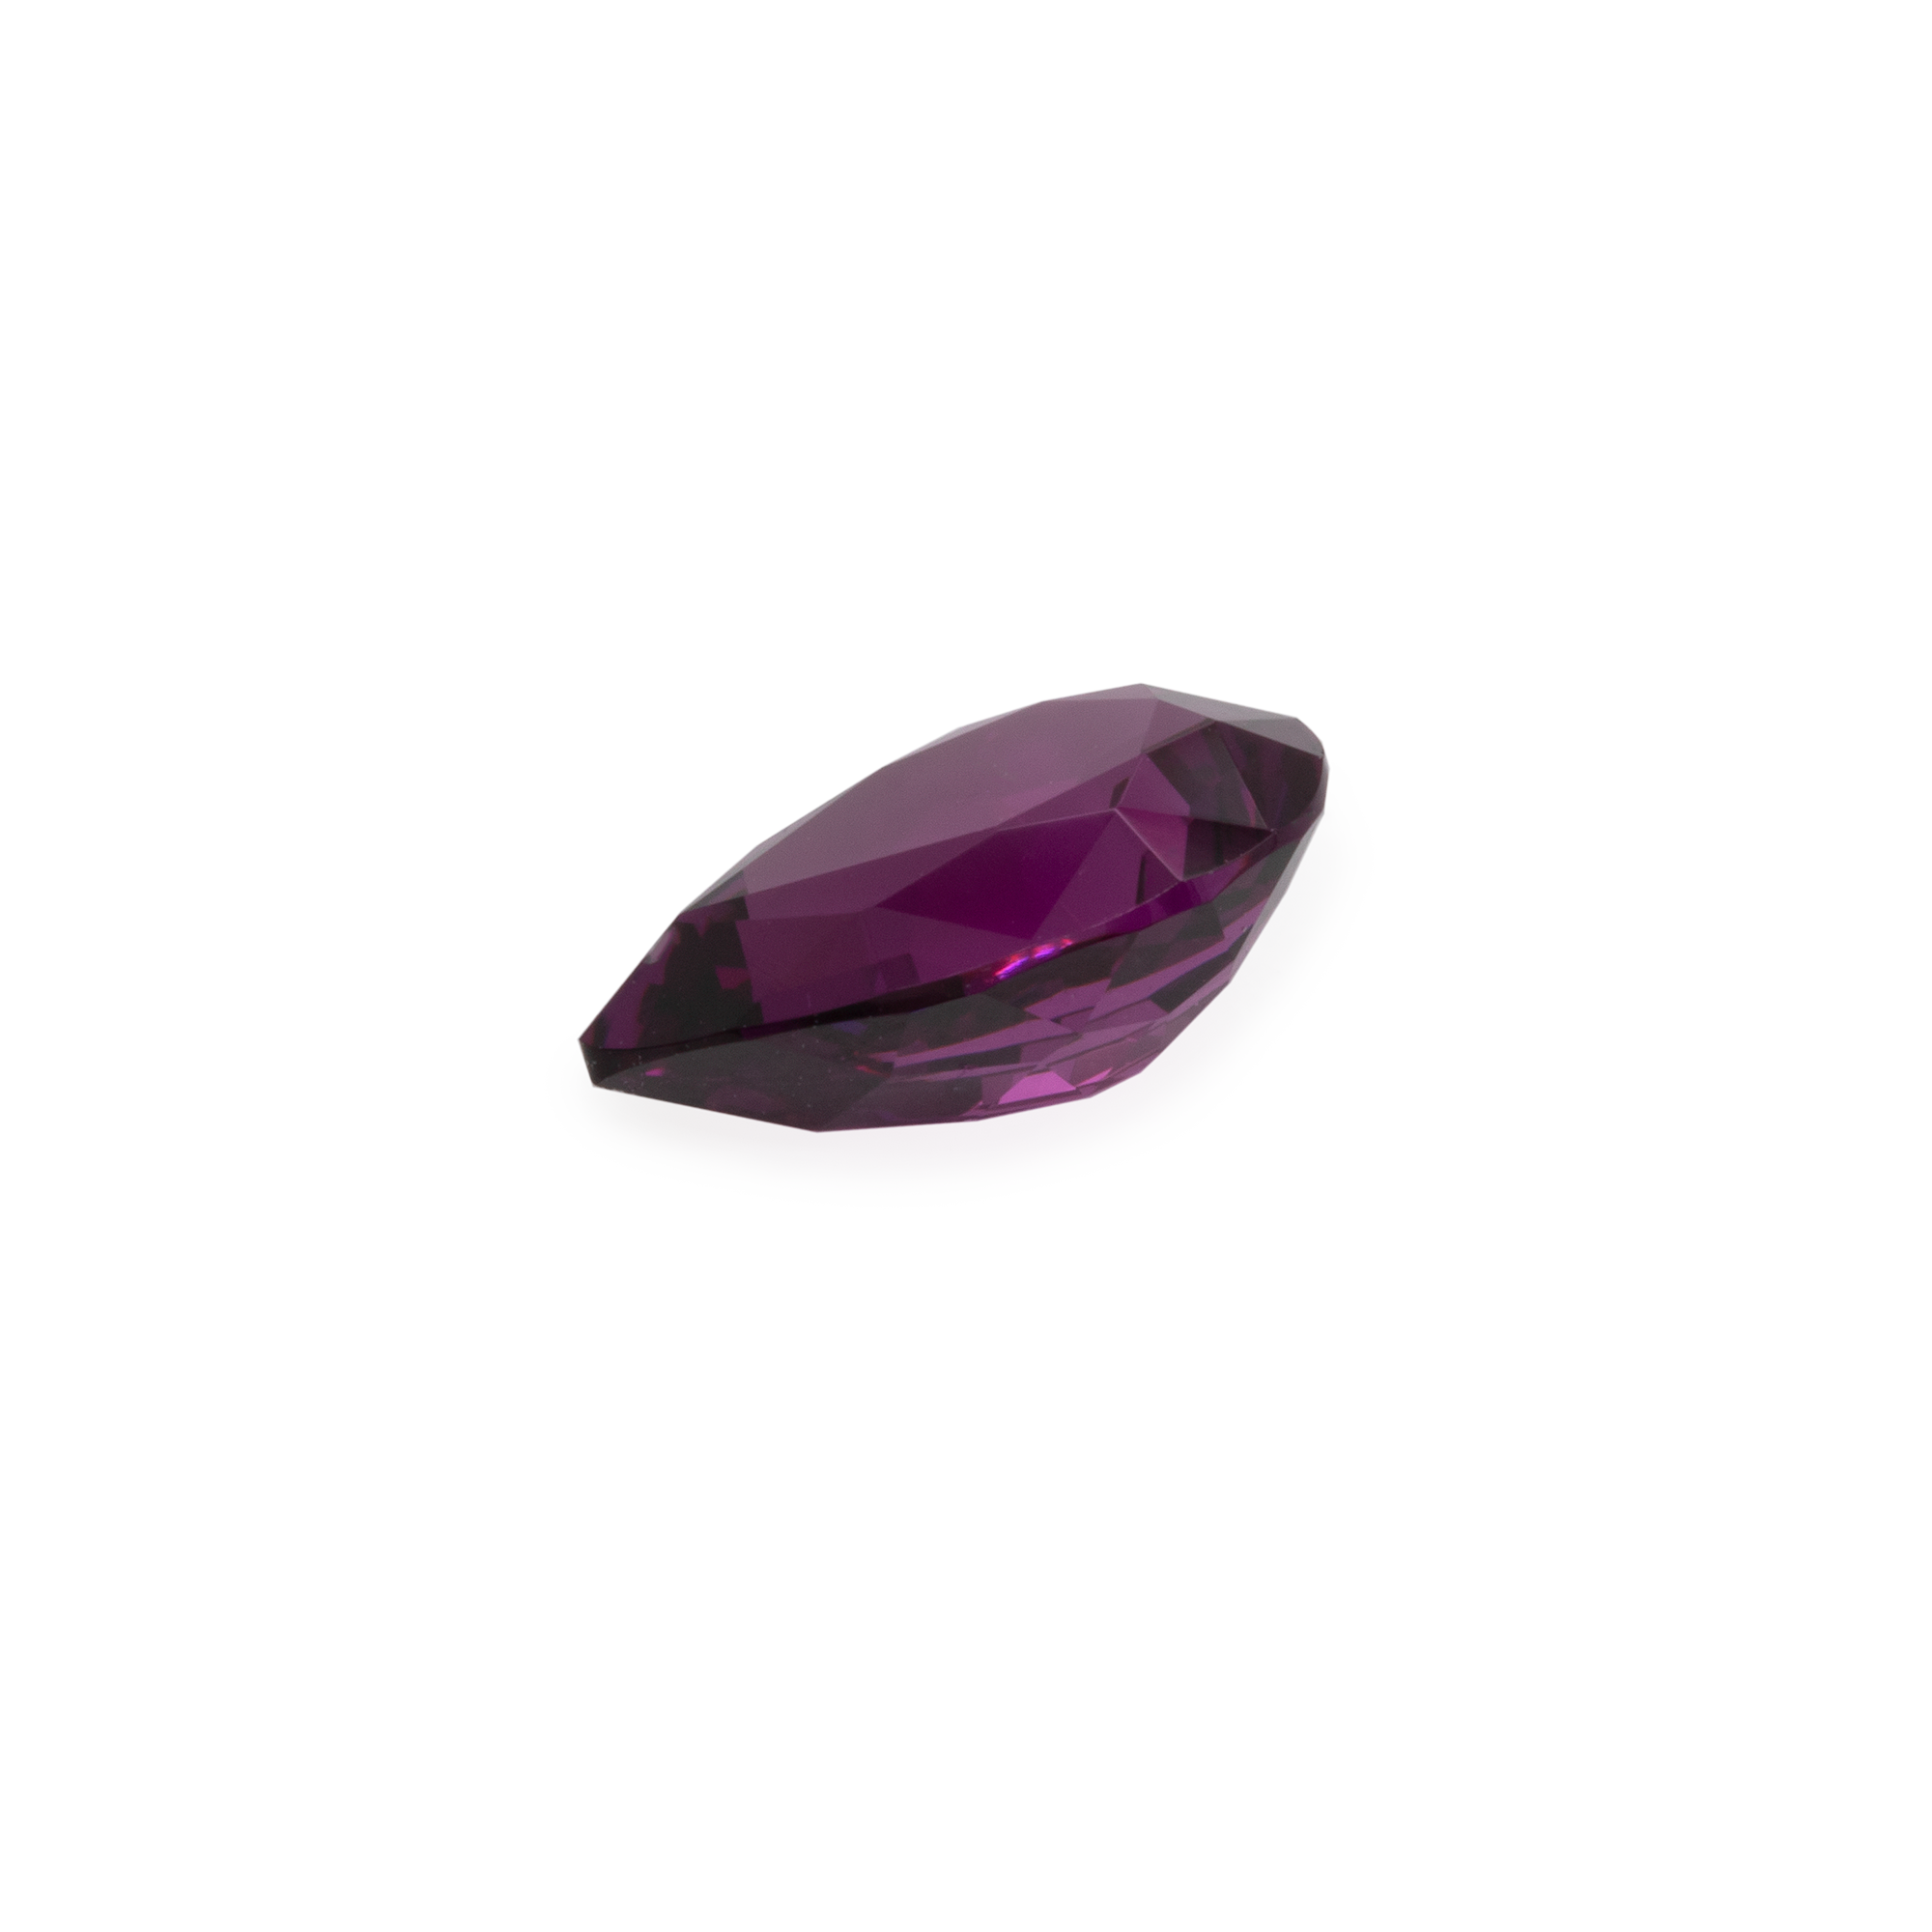 Royal Purple Garnet - lila, birnform, 9x6 mm, 1,50-1,69 cts, Nr. RP38001